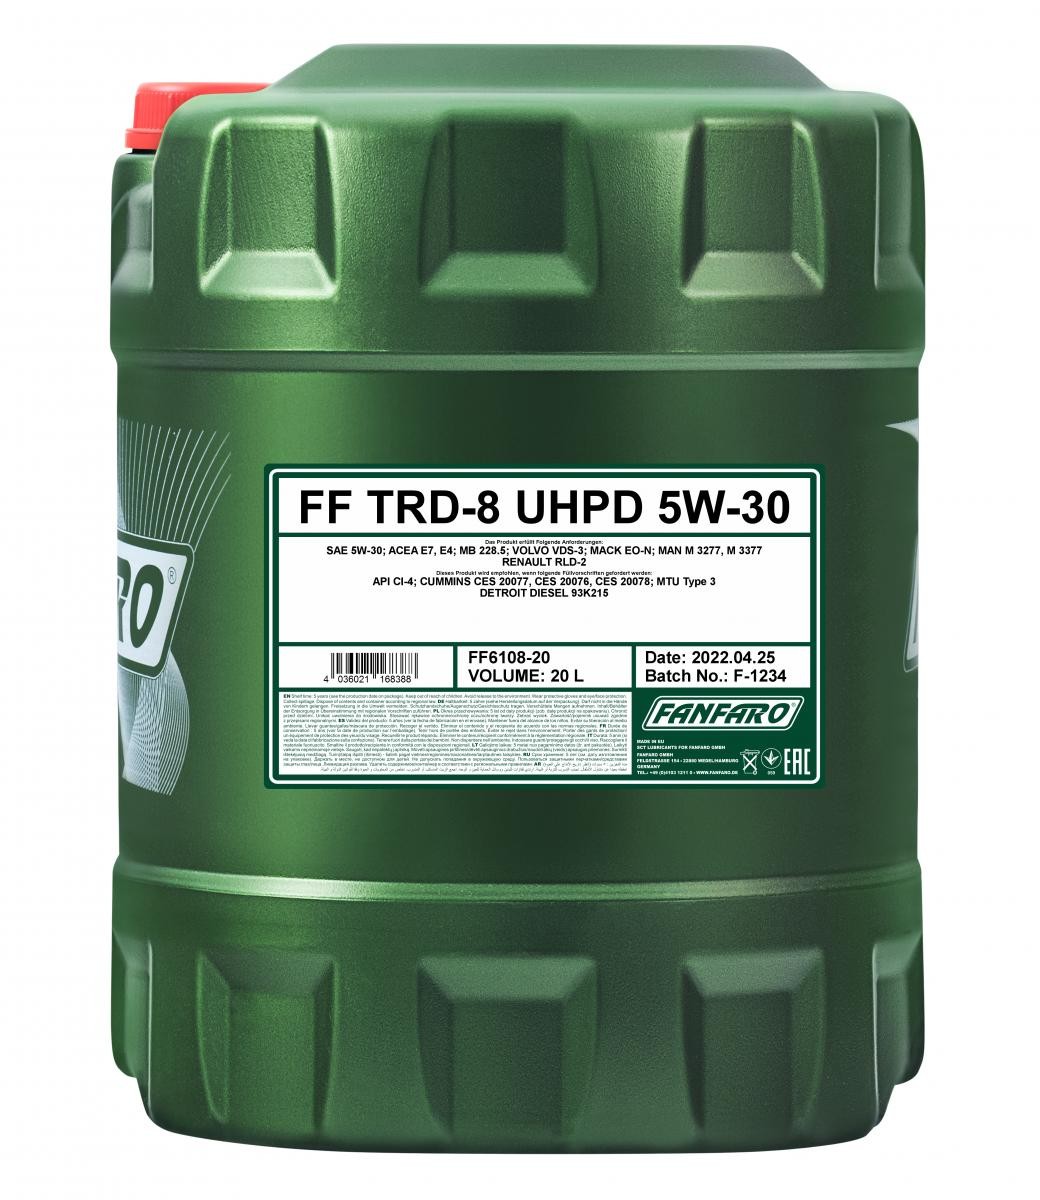 FANFARO UHPD, TRD-8 FF6108-20 Engine oil 5W-30, 20l, Synthetic Oil